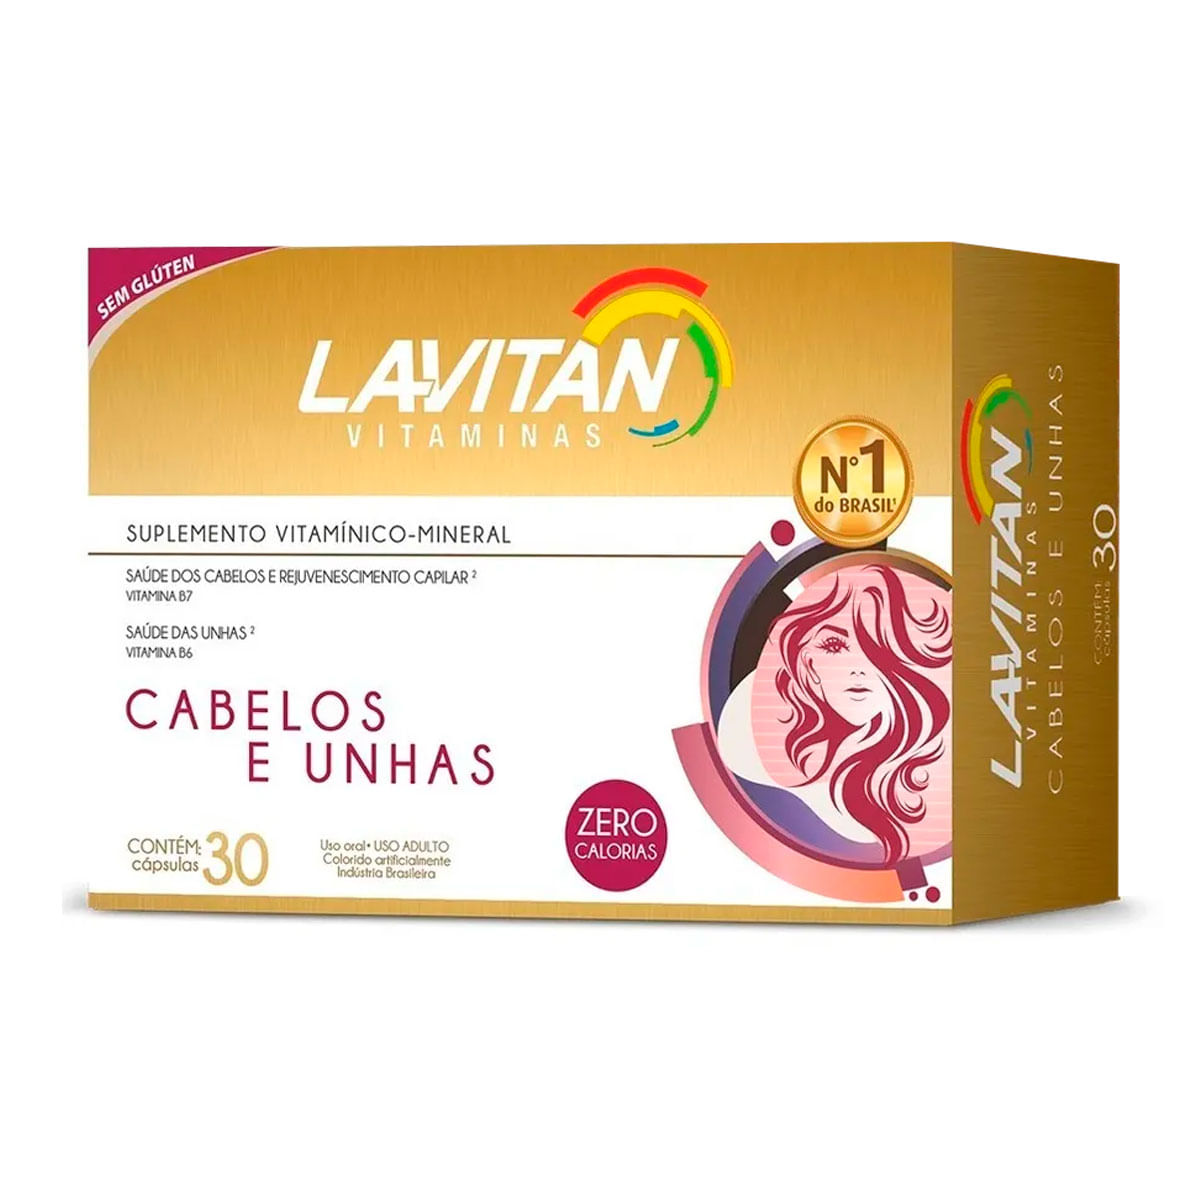 Lavitan Vitaminas Suplemento Vitamínico para Cabelos e Unhas com 30 Cápsulas Cimed